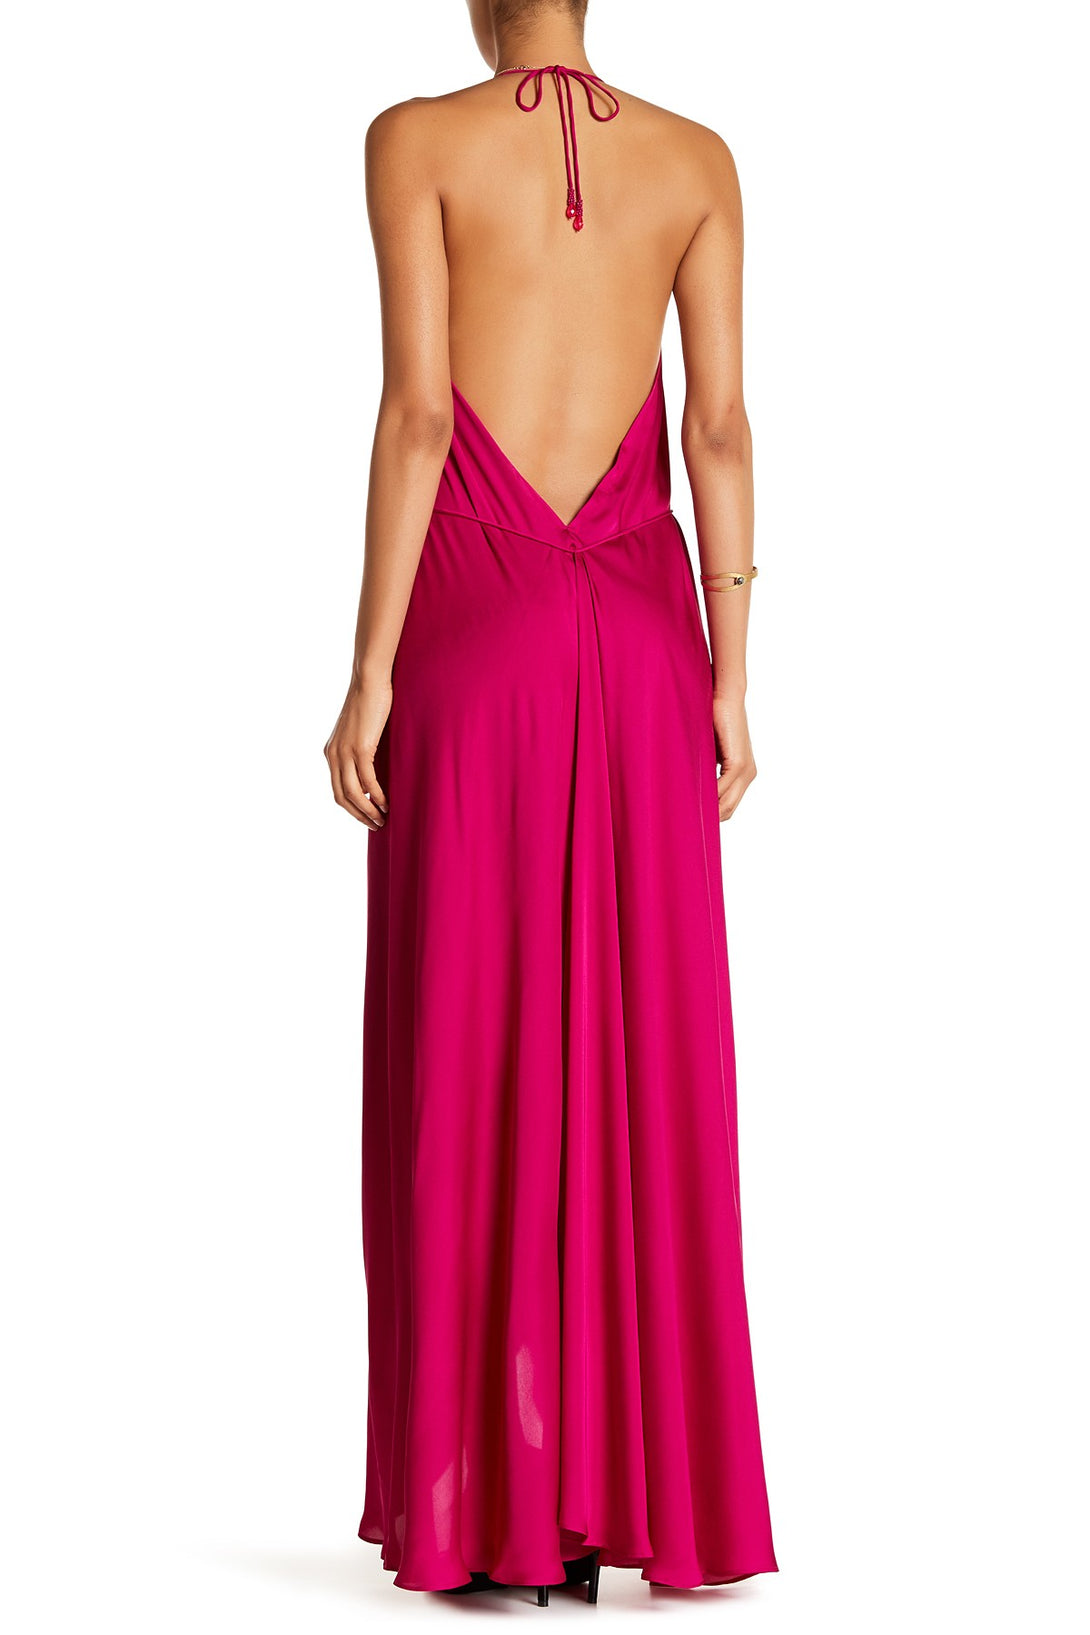  hot pink color dress, Shahida Parides, beach maxi dress, long summer dresses, backless maxi dress,